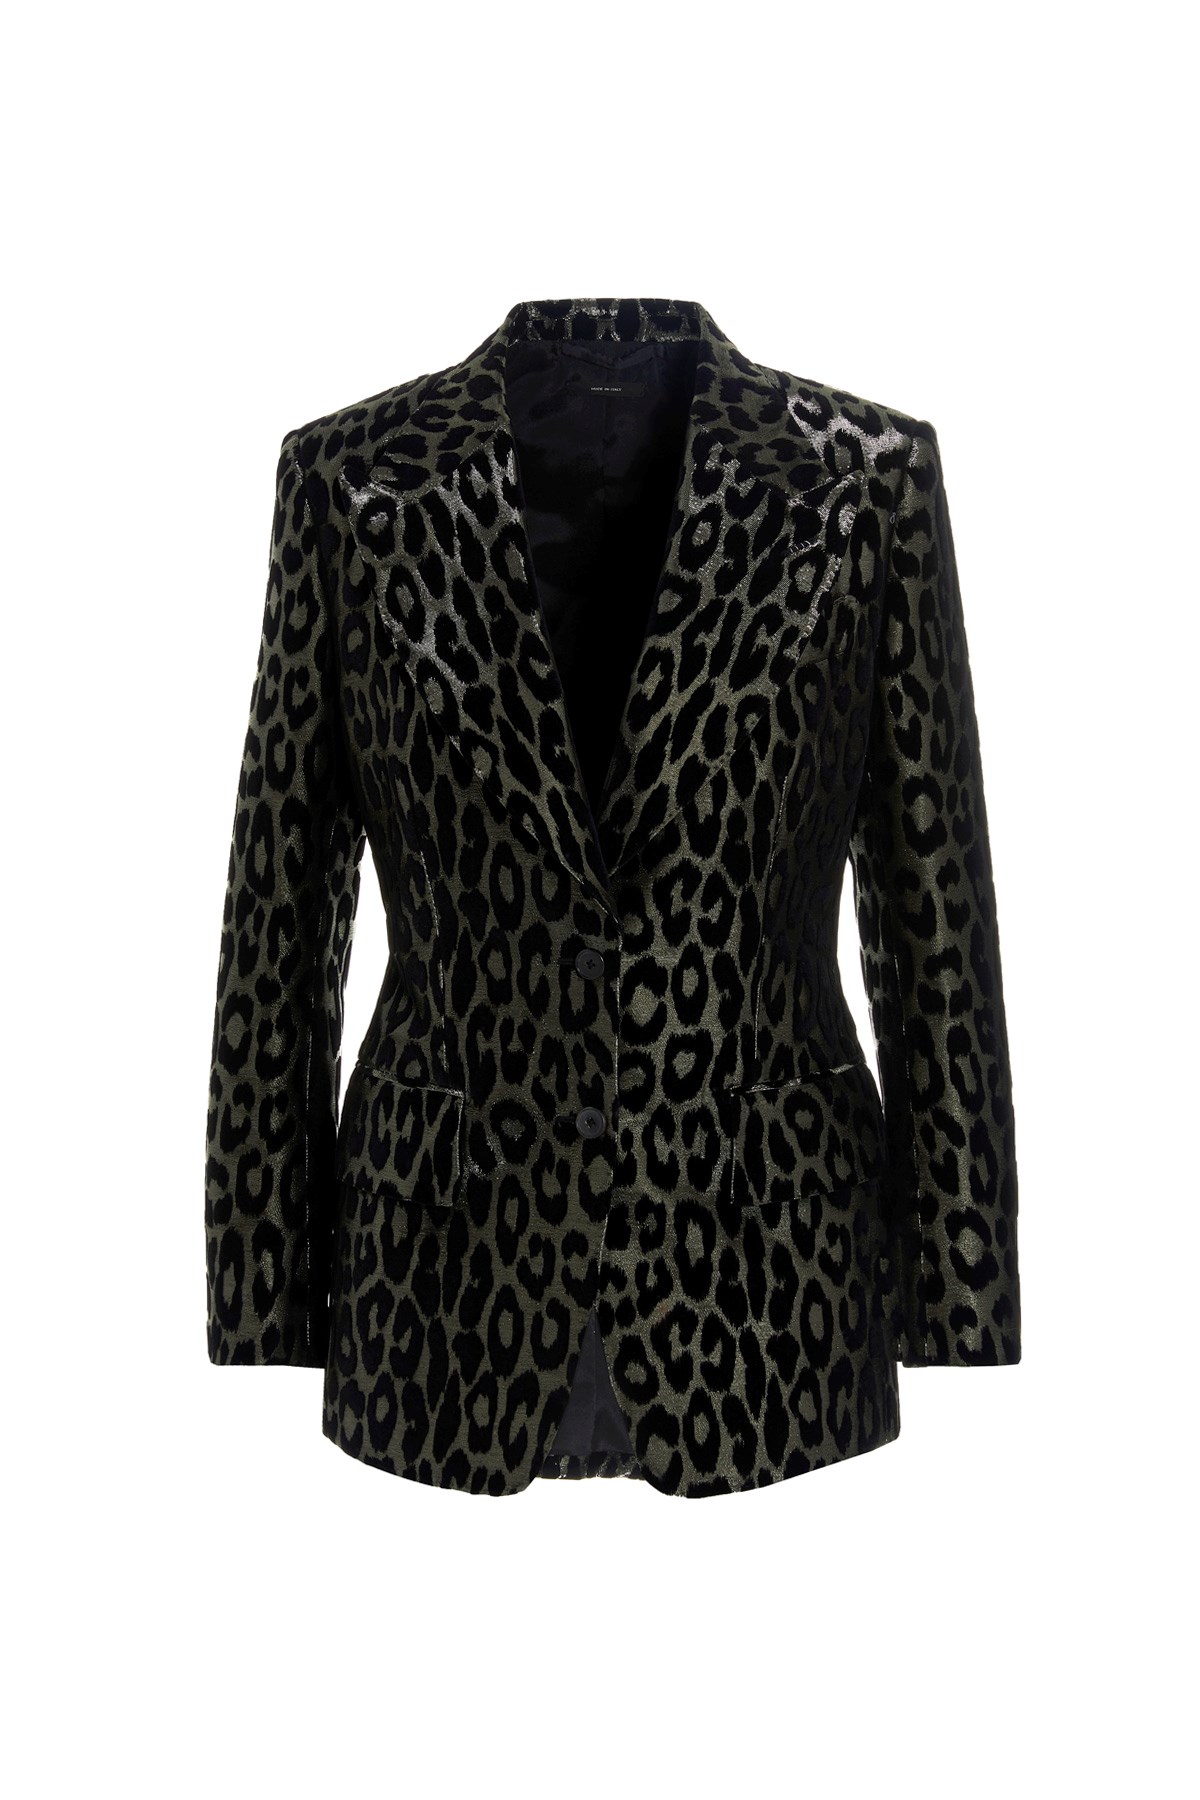 TOM FORD 'Flock Leopard’ Blazer Jacket